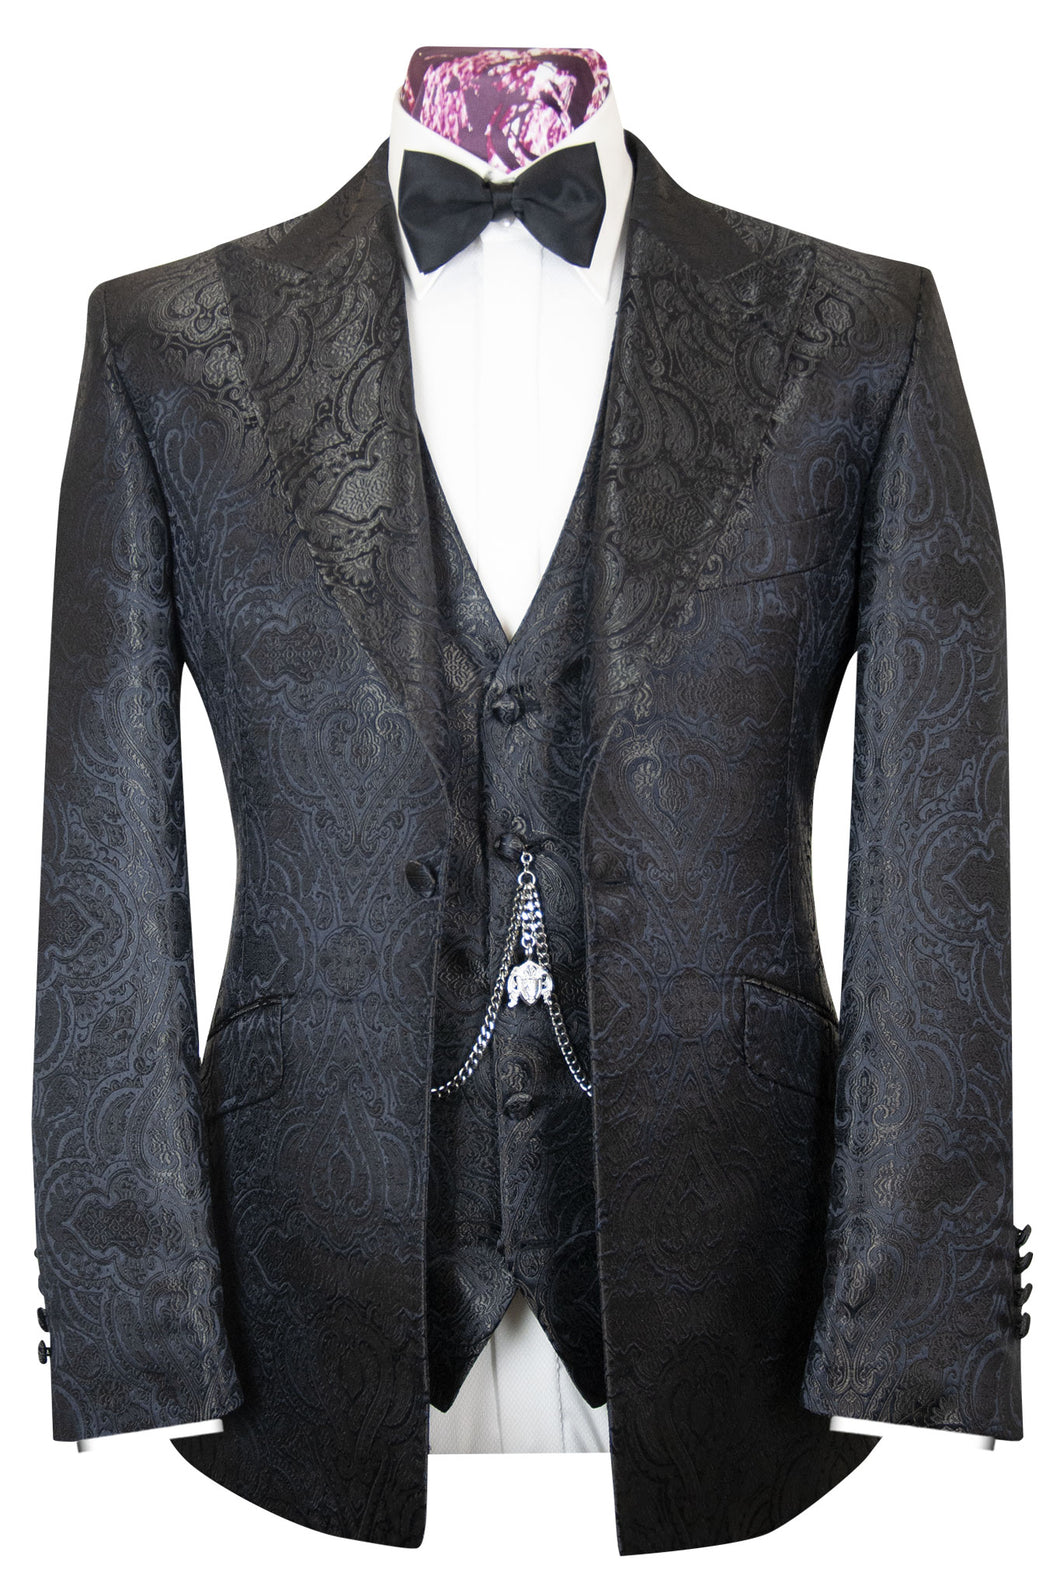 The Atlee Black Paisley Pattern Dinner Suit